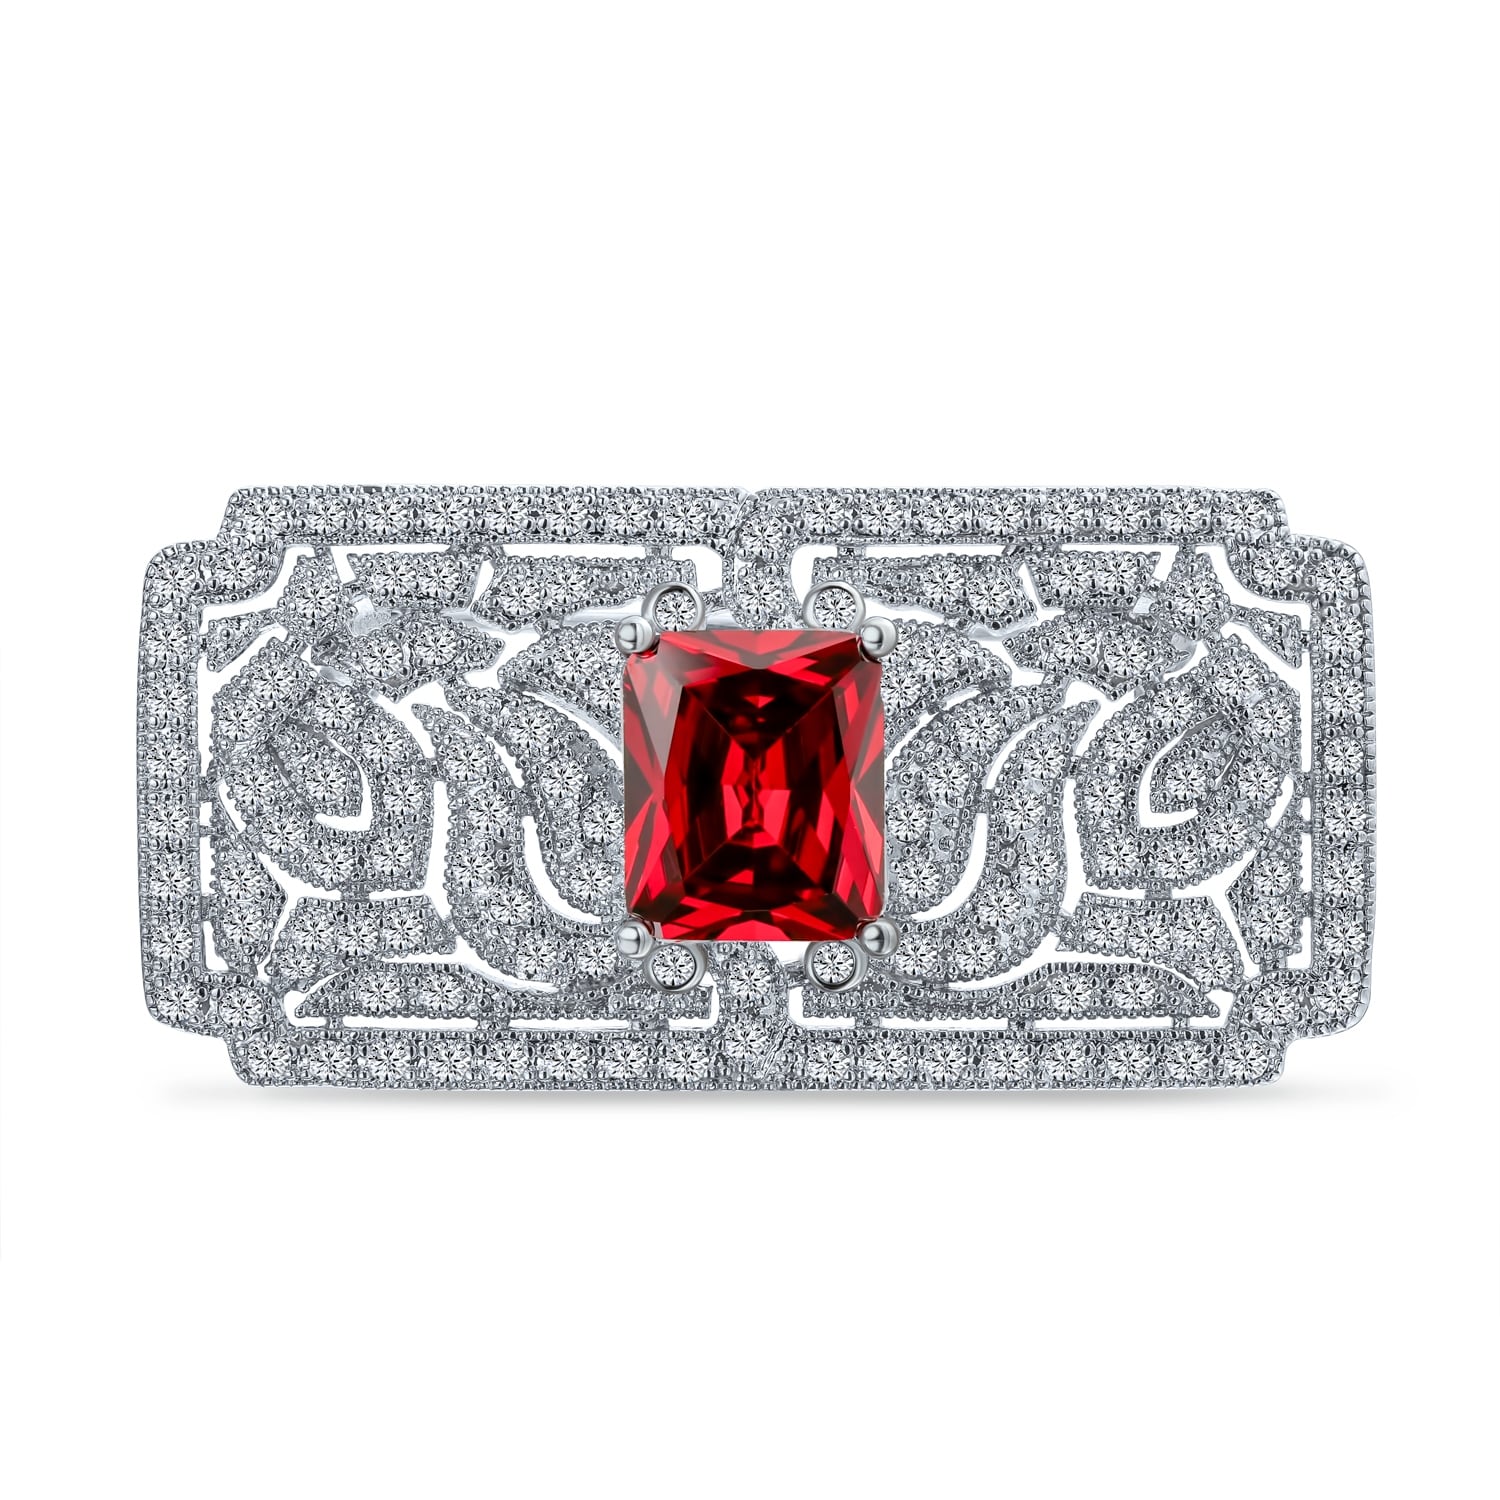 WLL Elegant Ruby Red Gray Rhinestone Shining Crystal Love Heart Brooch Pin